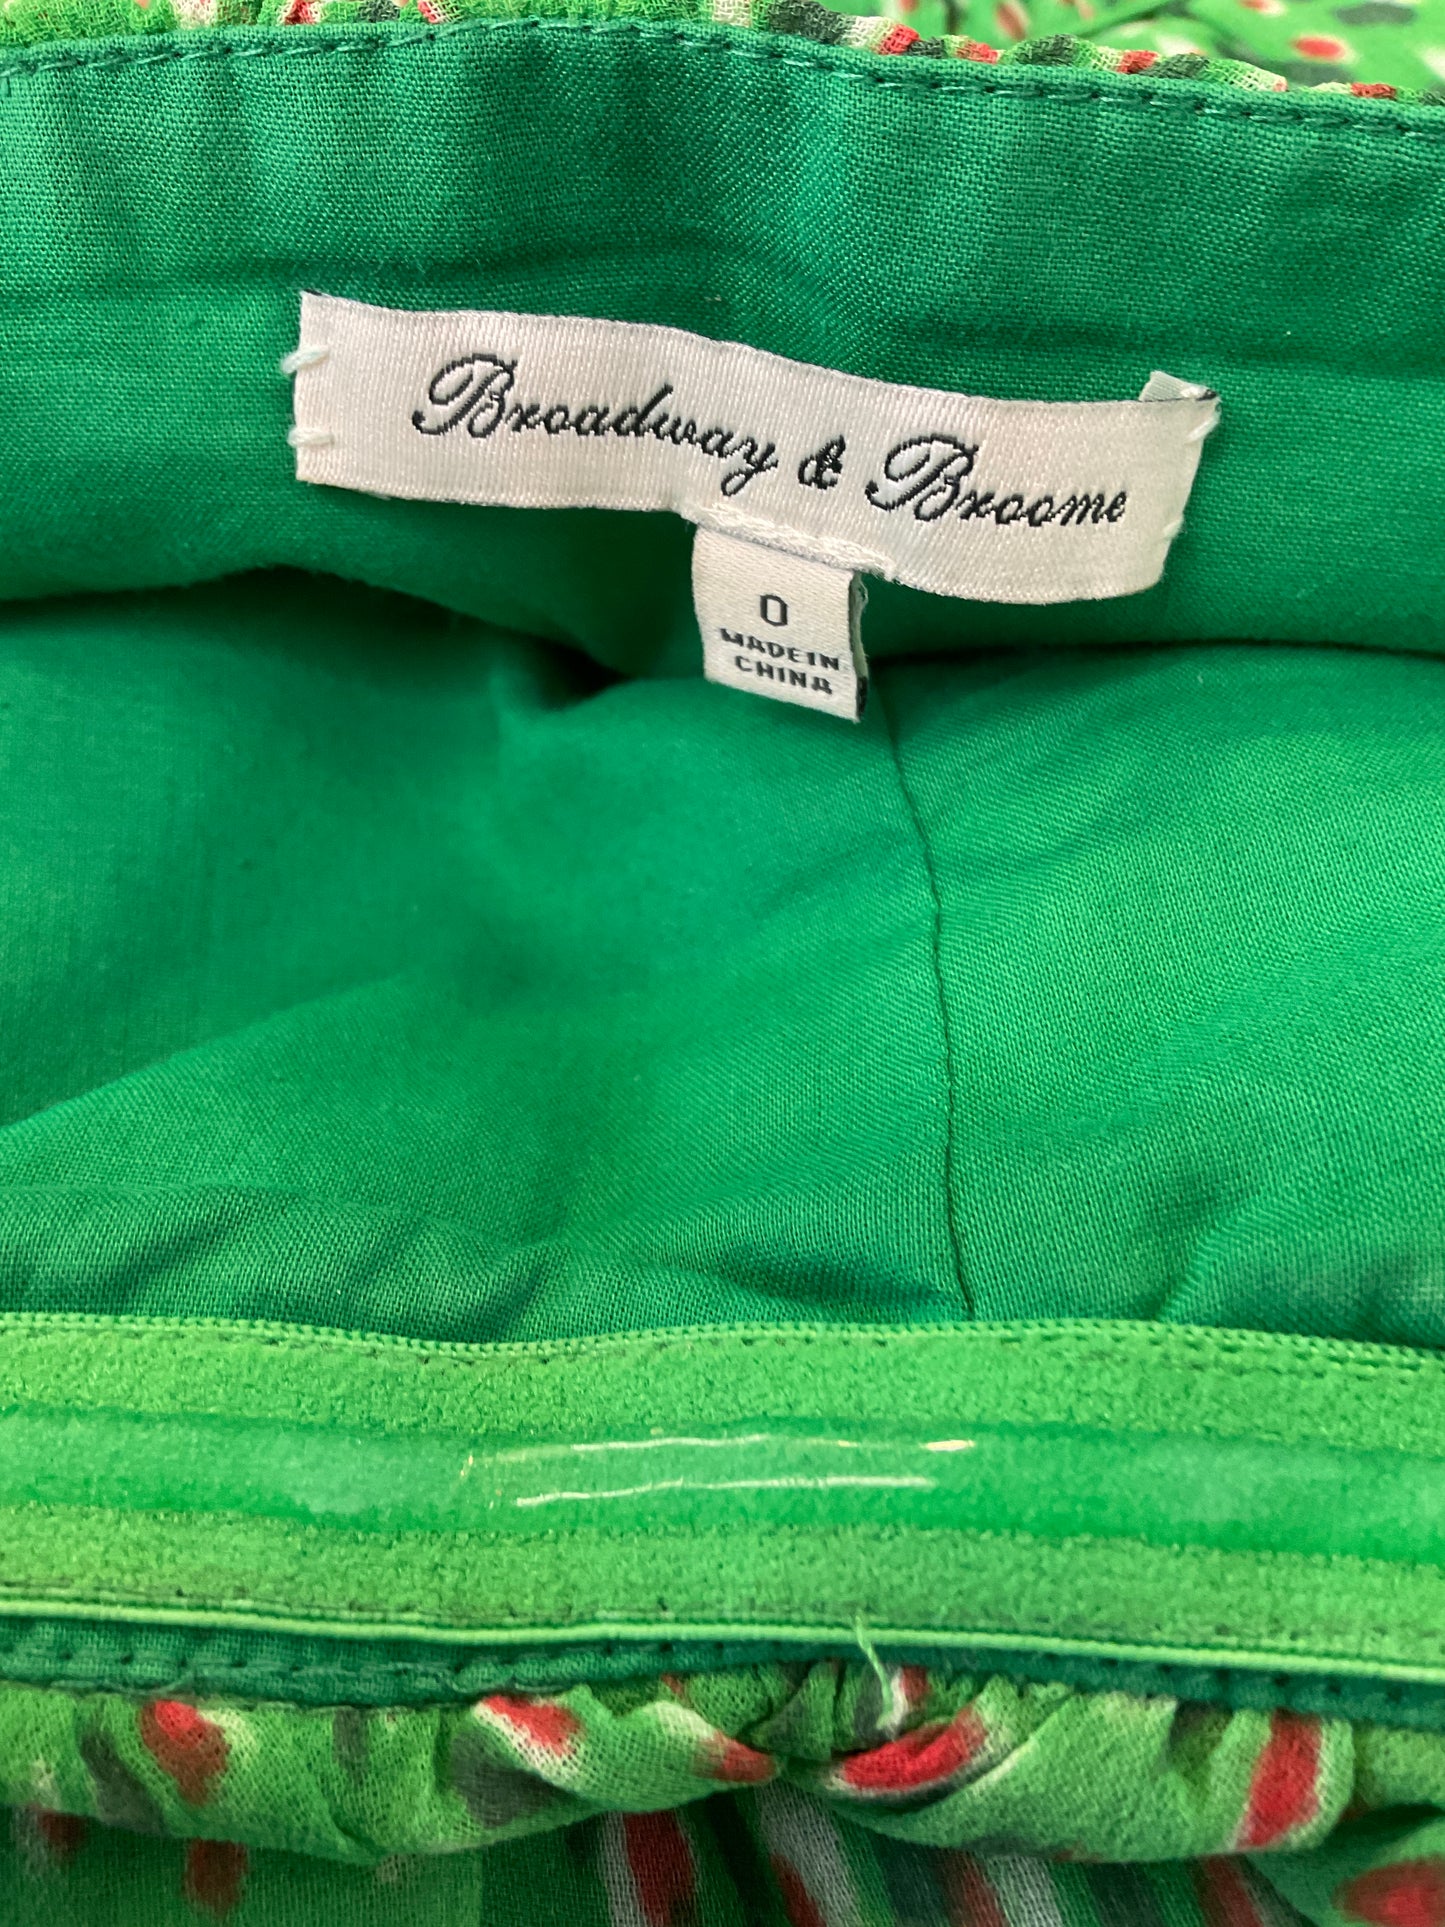 Broadway & Broome Strapless Dress, Size 0